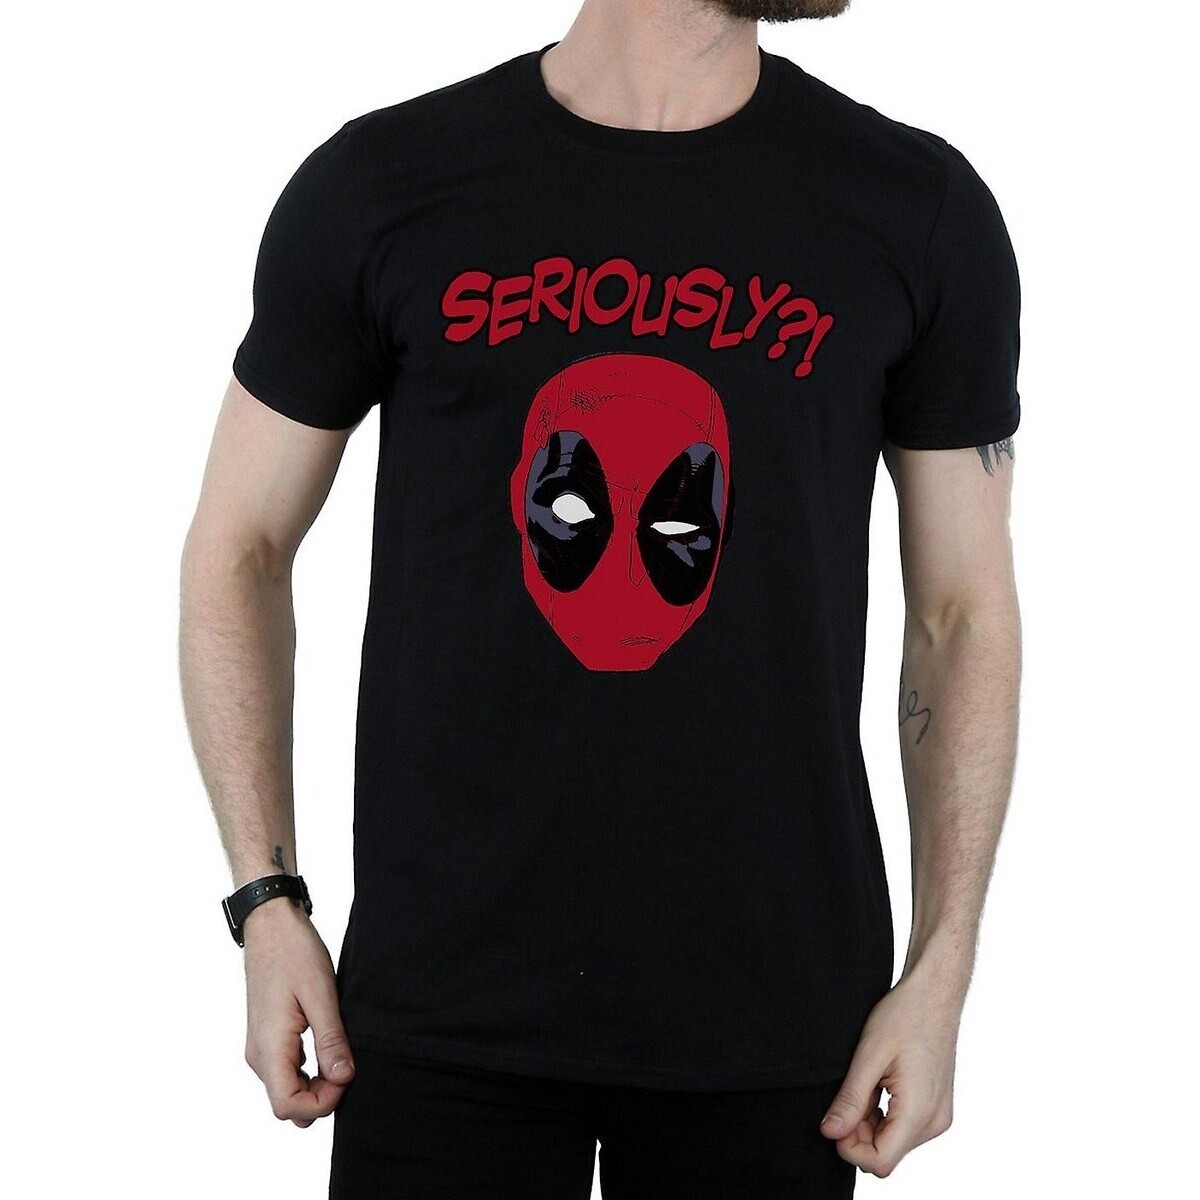 textil Camisetas manga larga Deadpool Seriously Negro